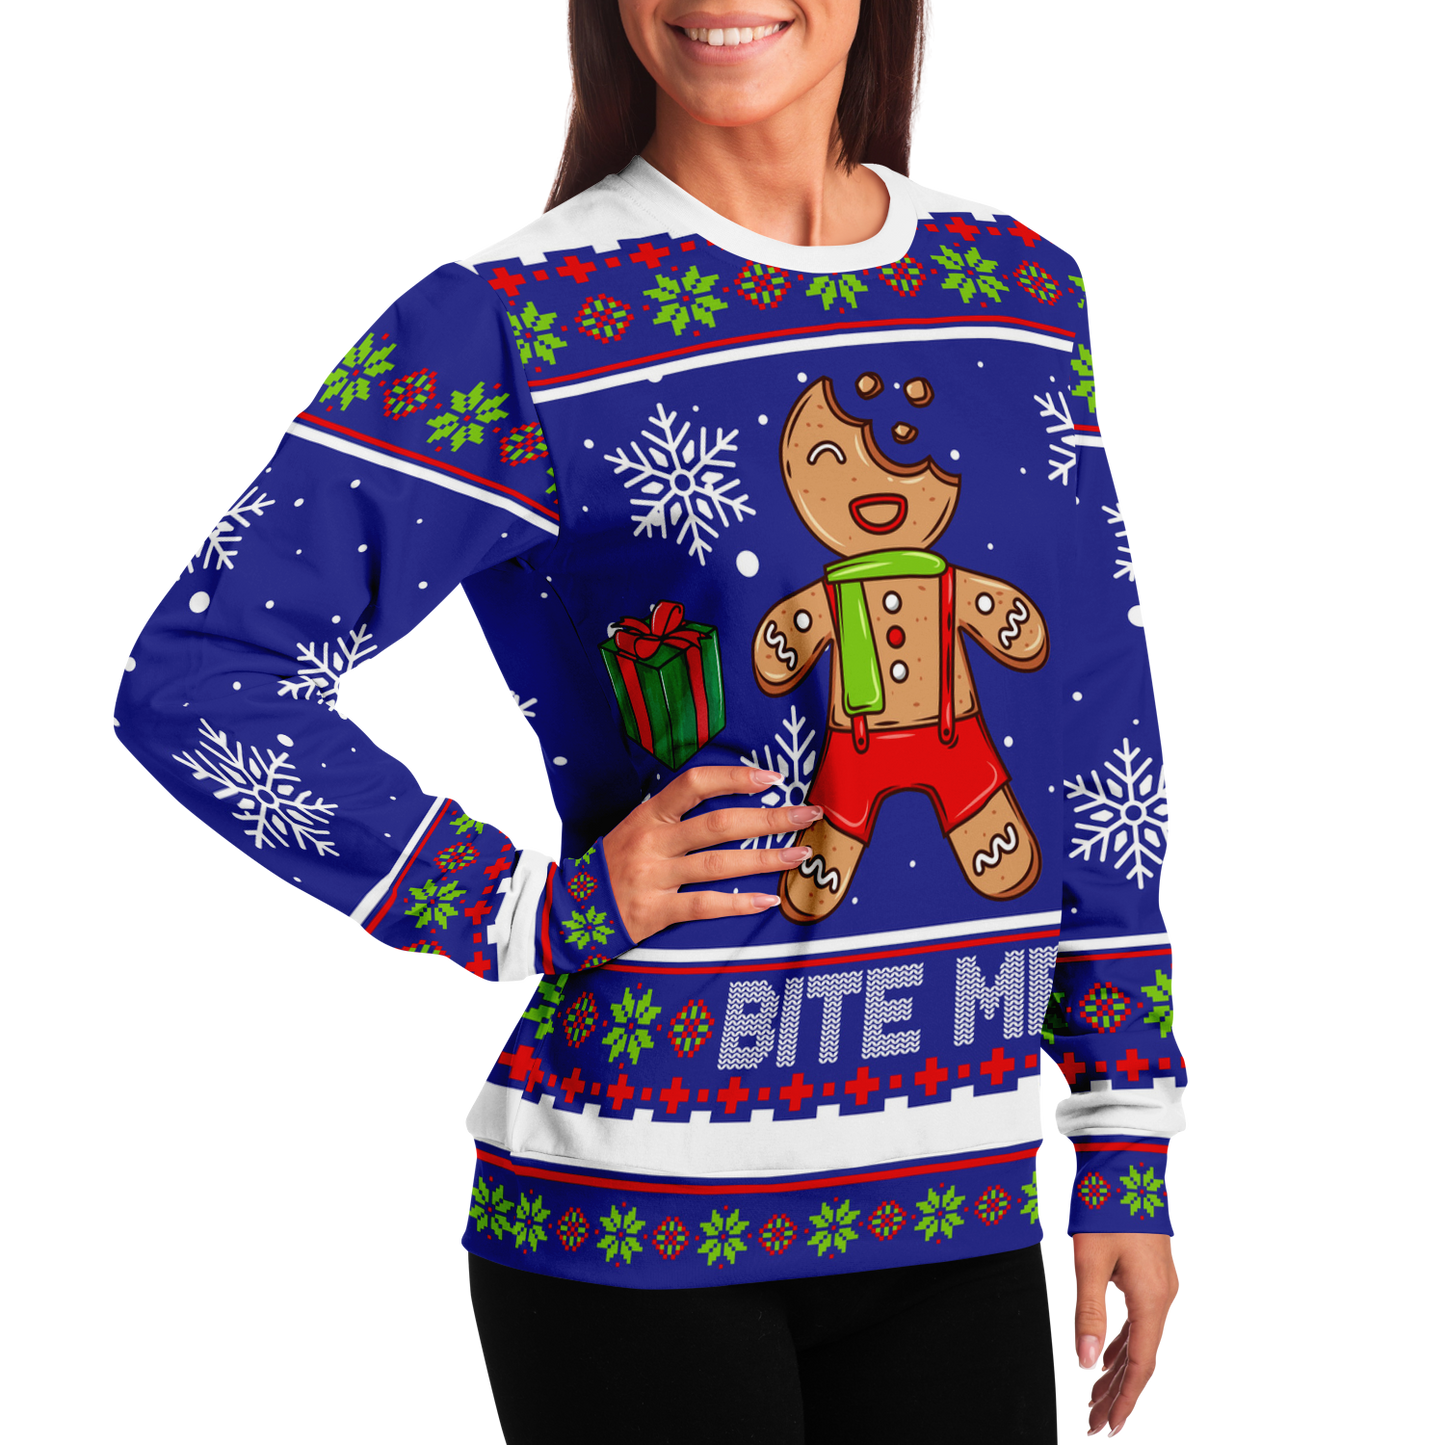 Bite Me - Ugly Christmas Sweater